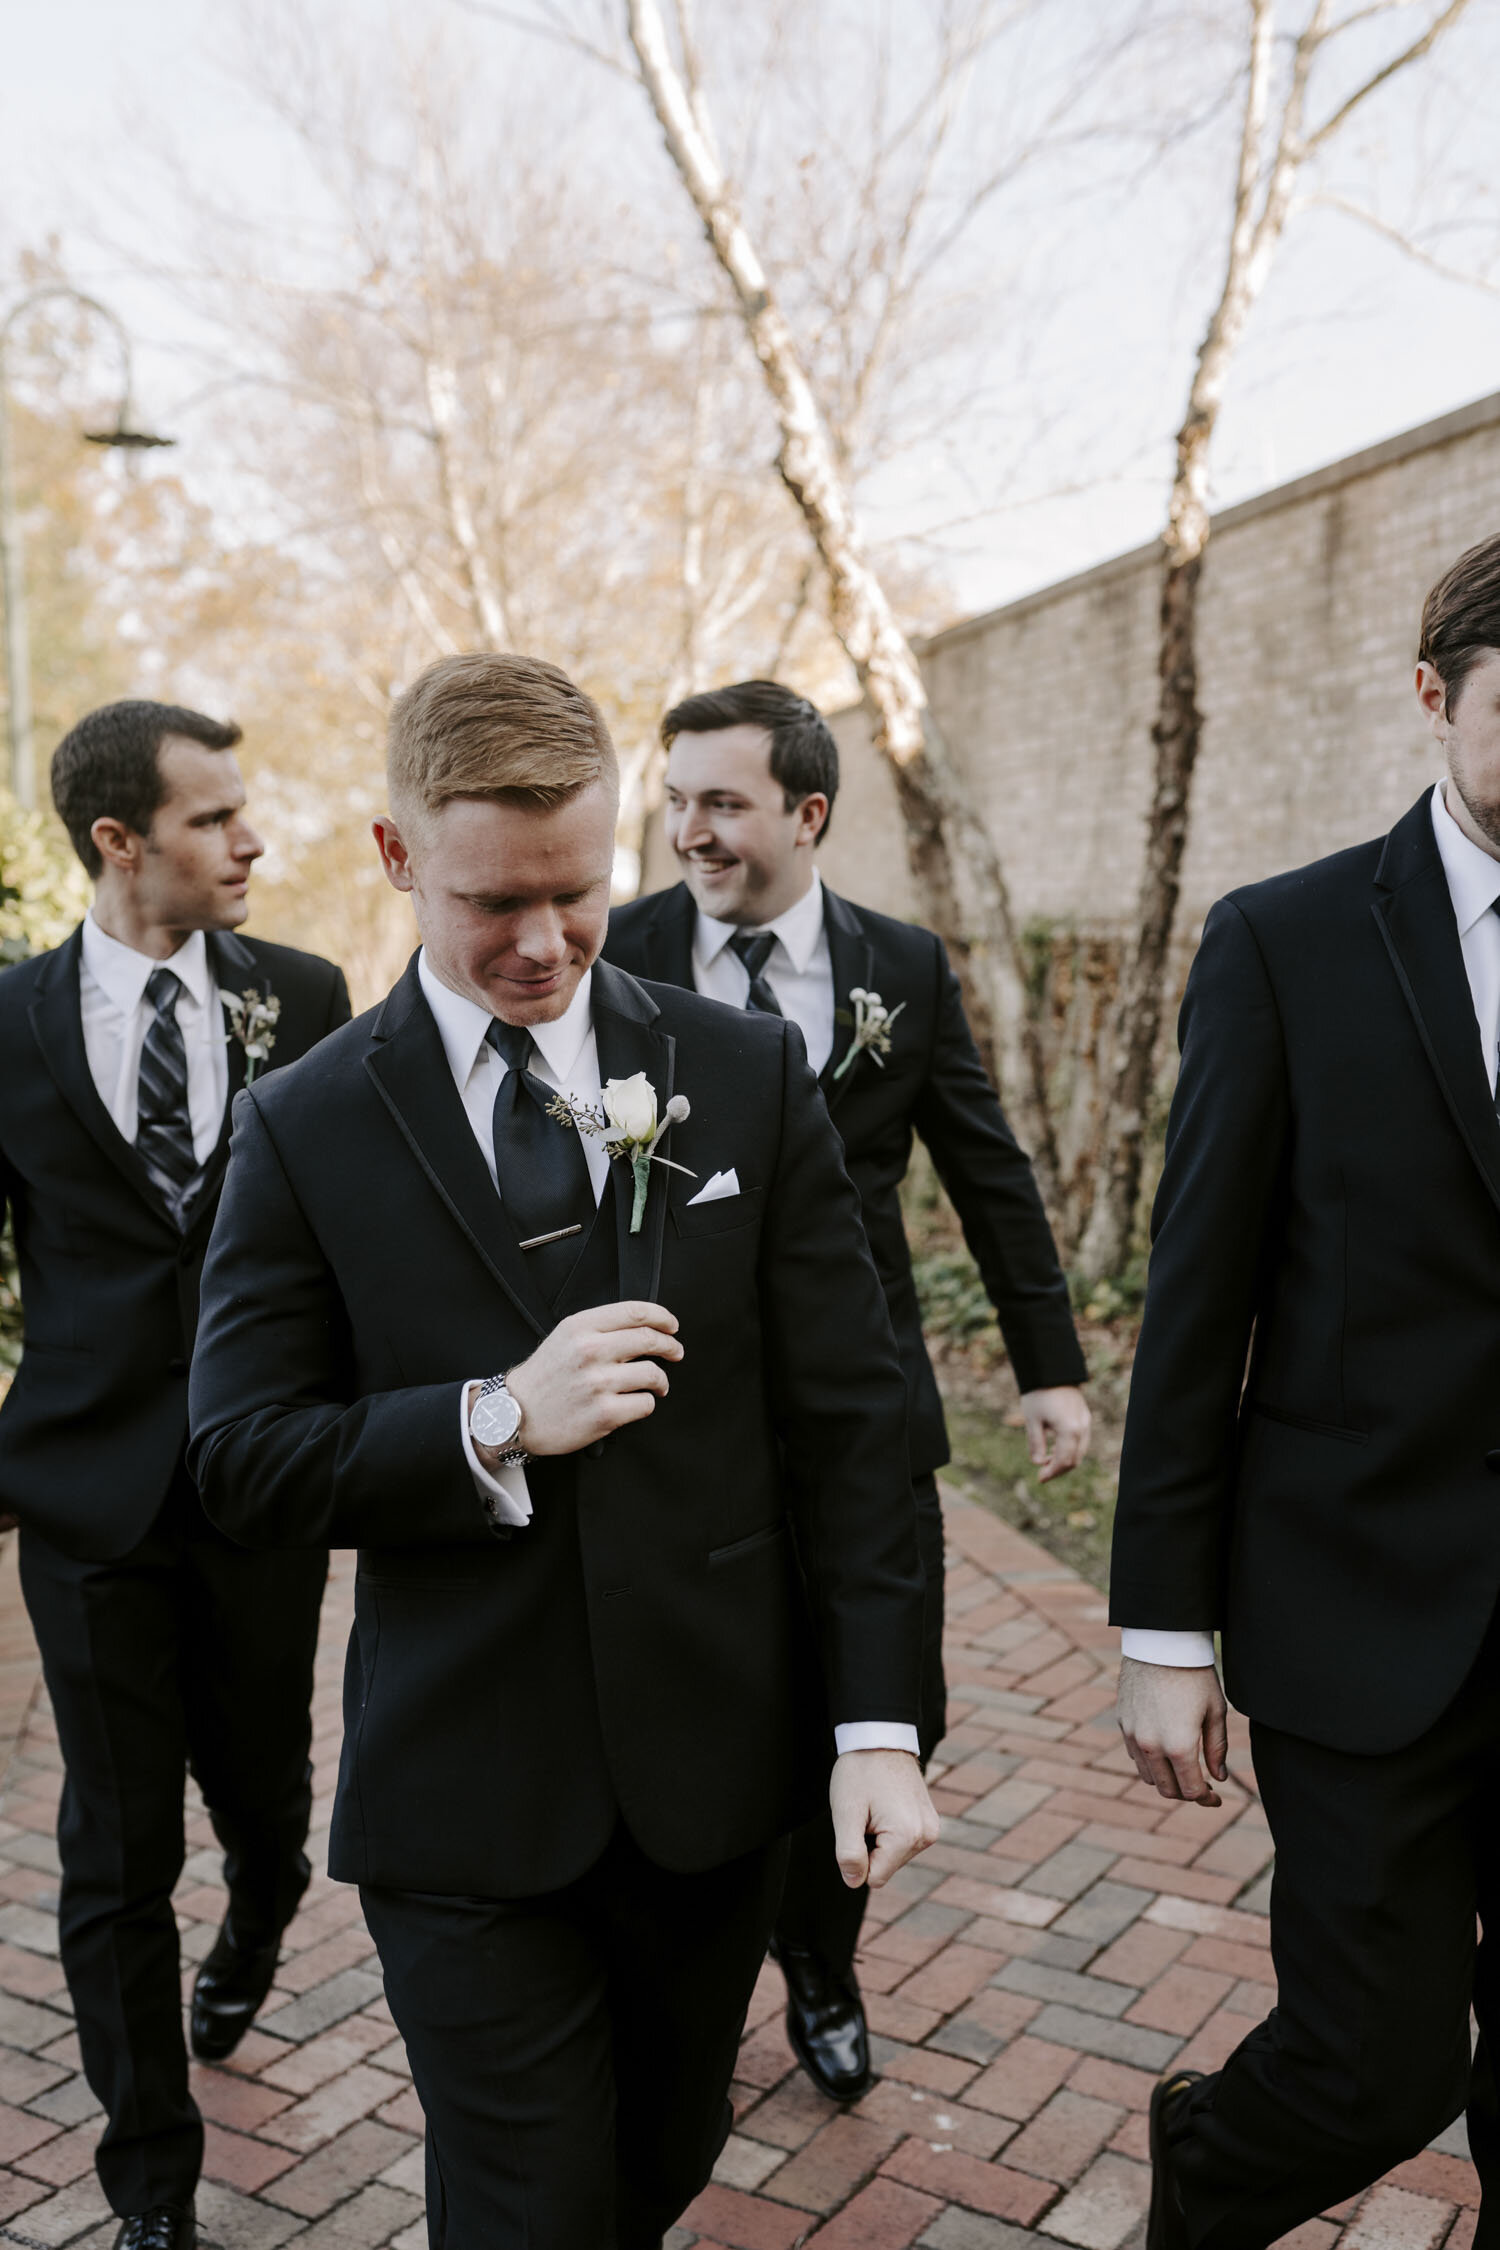 Classy and Elegant Wedding Party Portraits at Grandover Resort Wedding by Kayli LaFon Photography | Greensboro Winston-Salem, NC Wedding Photographer